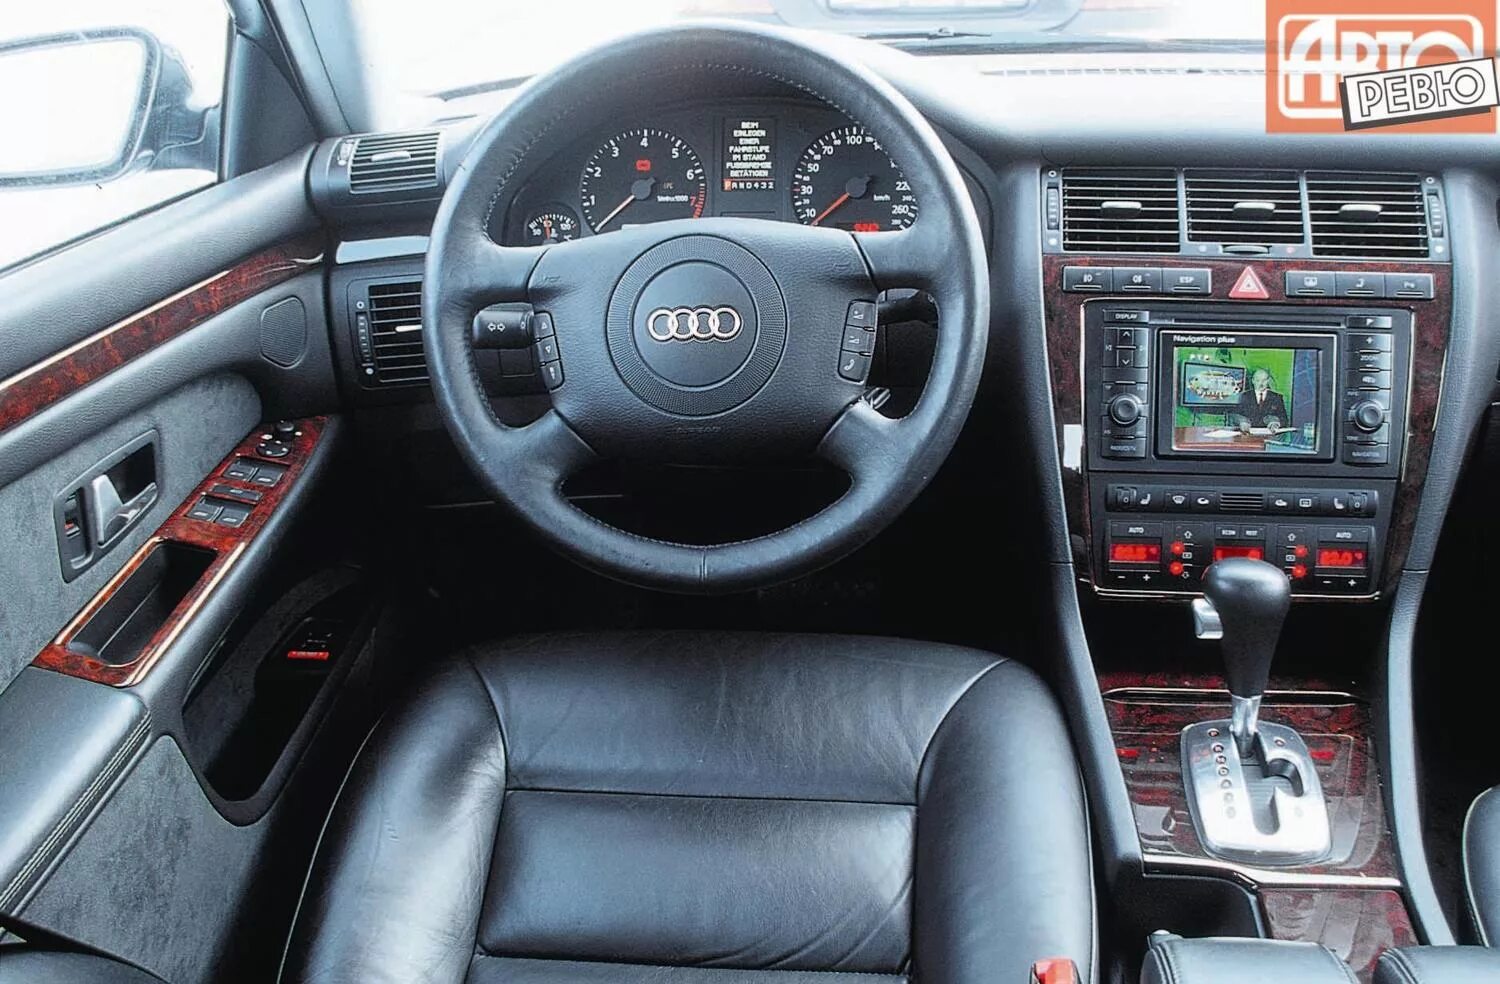 Audi a8 d2 Interior. Audi a8 2000. Audi a8 1998. Audi a8 d2 (1994-2002). 3 0 8 2000